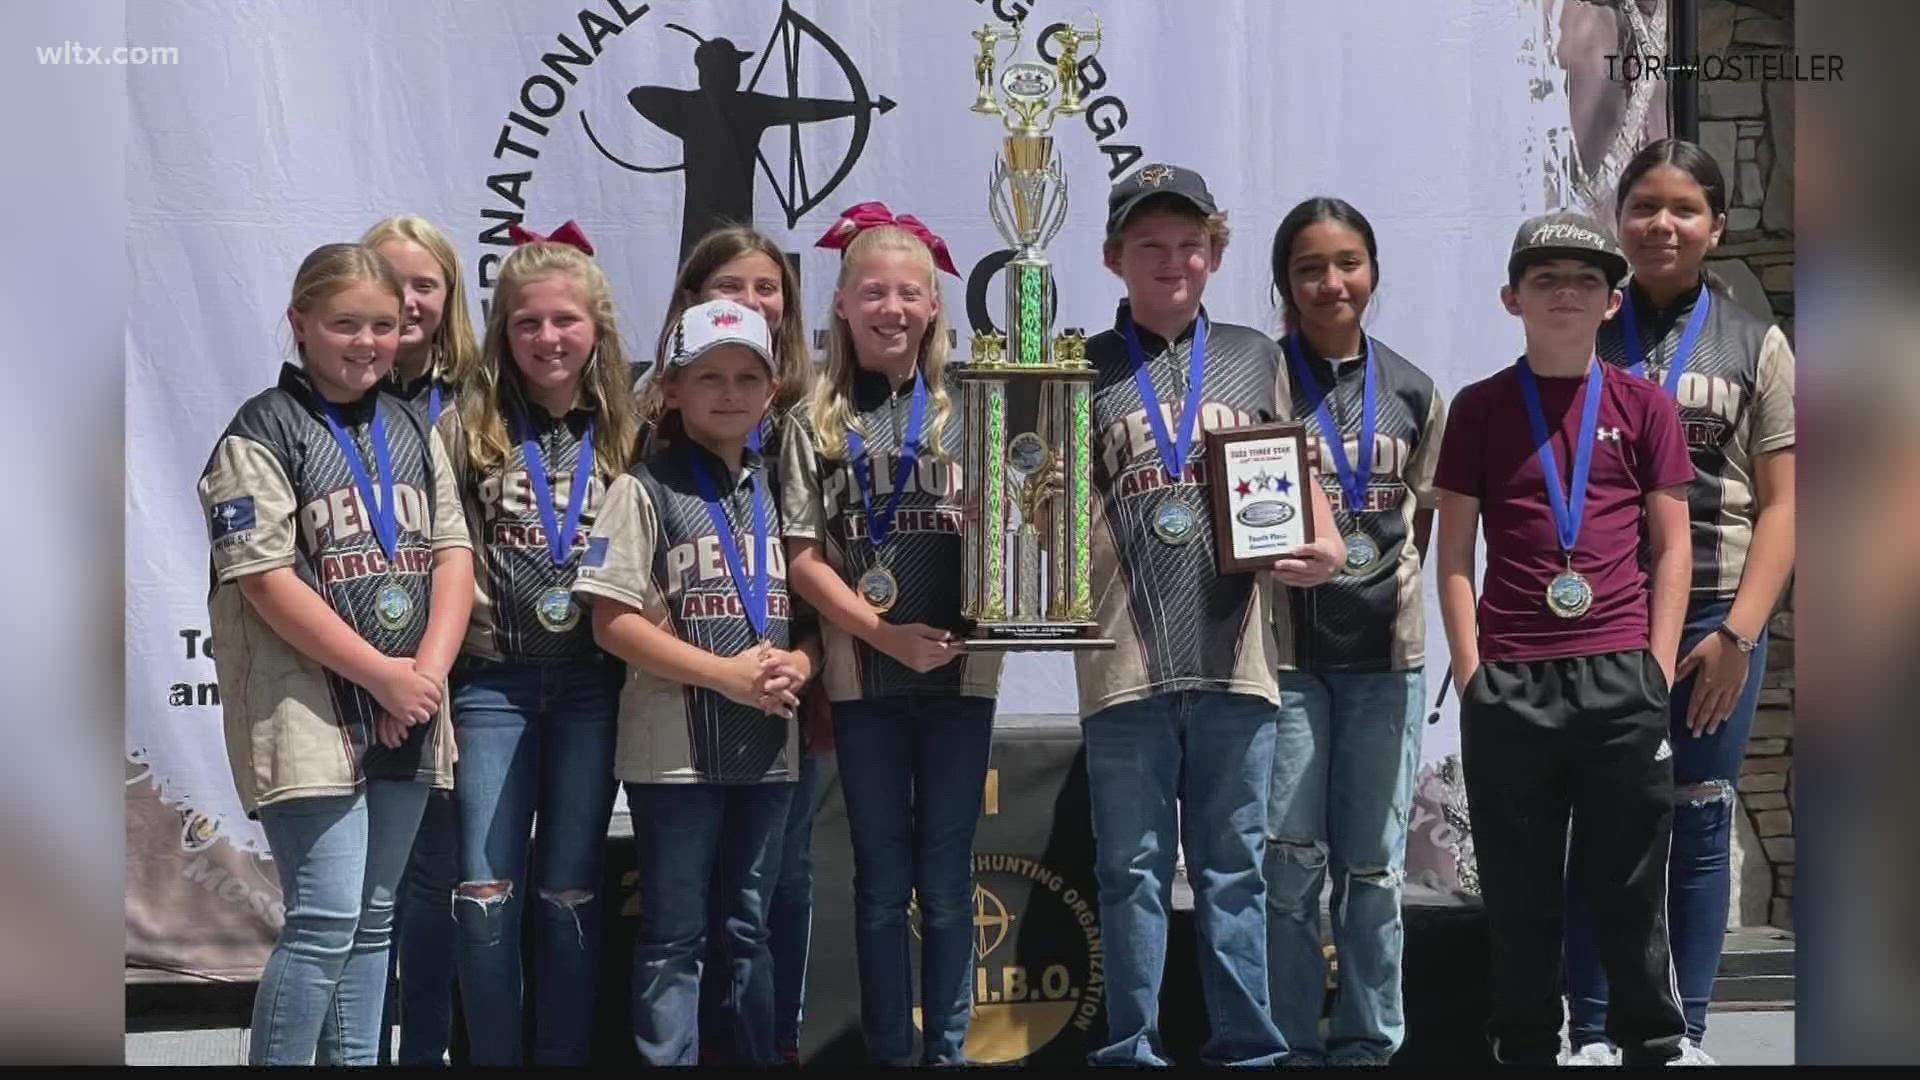 Taking on the globe, Pelion Elementary School's archery team is now a world champion.